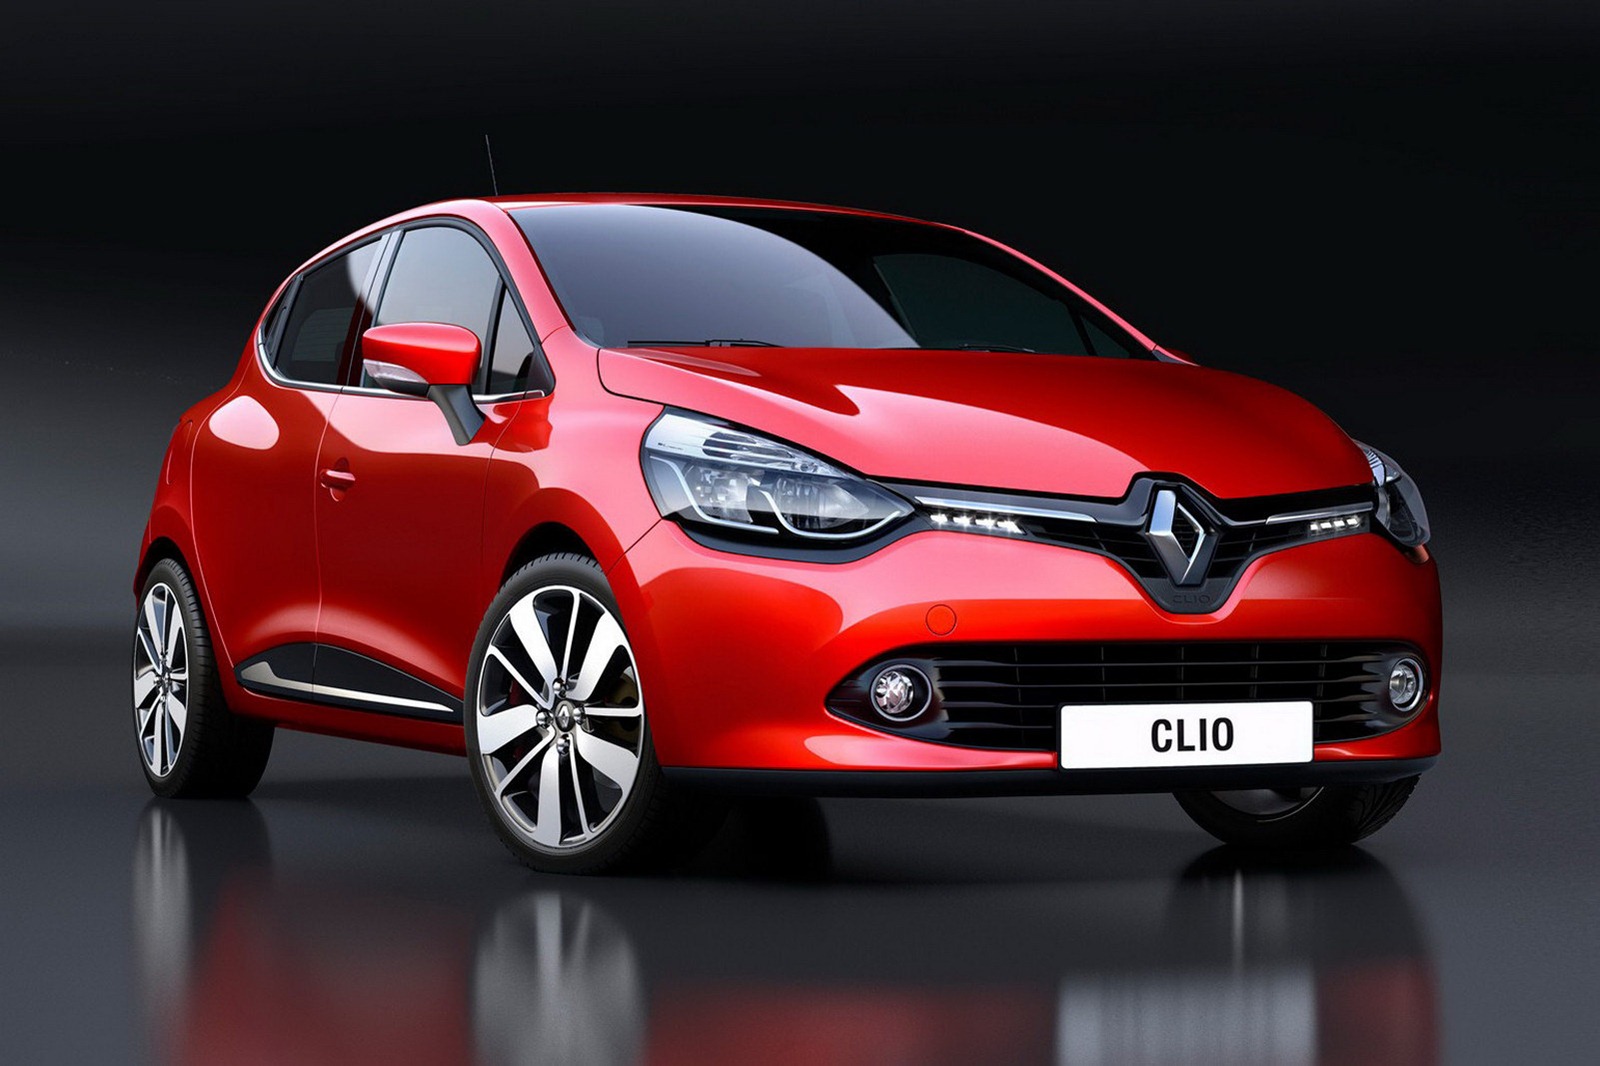 2013-Renault-Clio-4-Mk4-Official-34.jpg?imgmax=1800